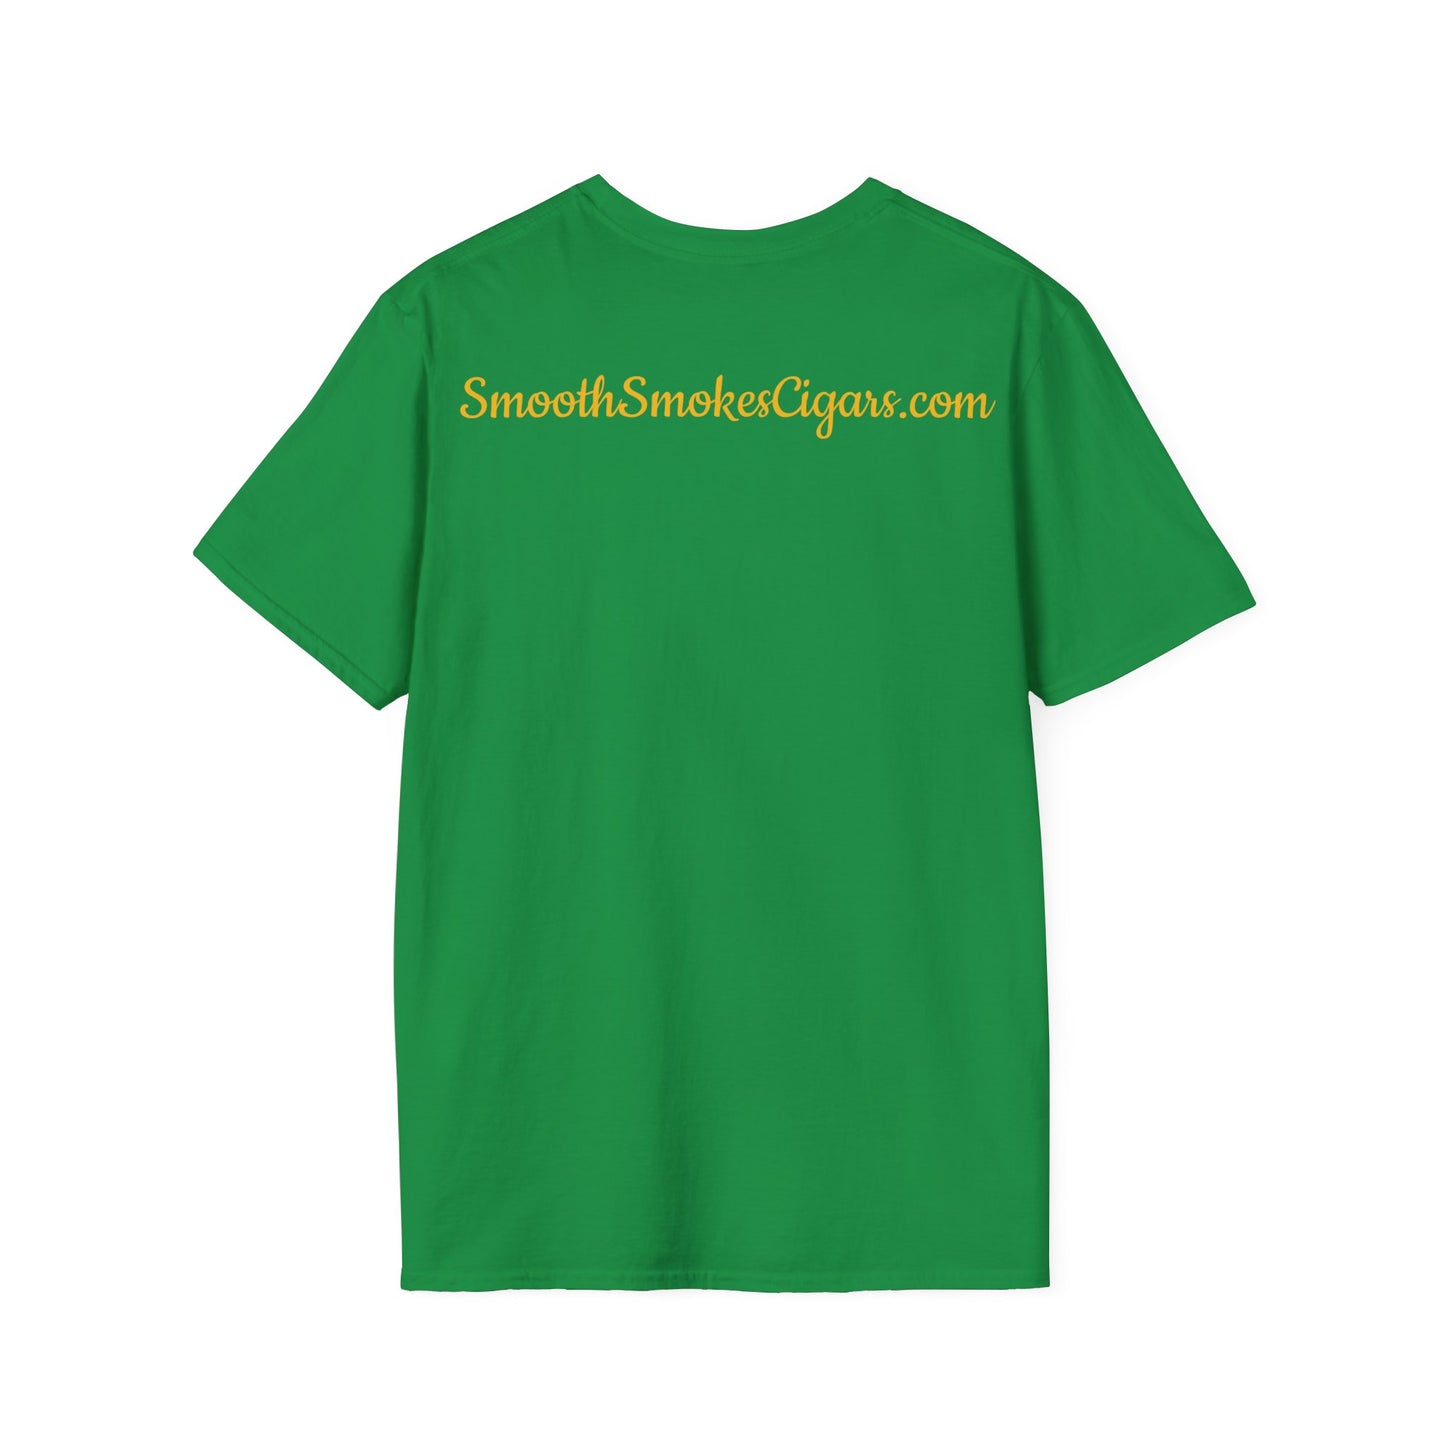 #CigarLife Unisex T-Shirt (Green/Yellow)